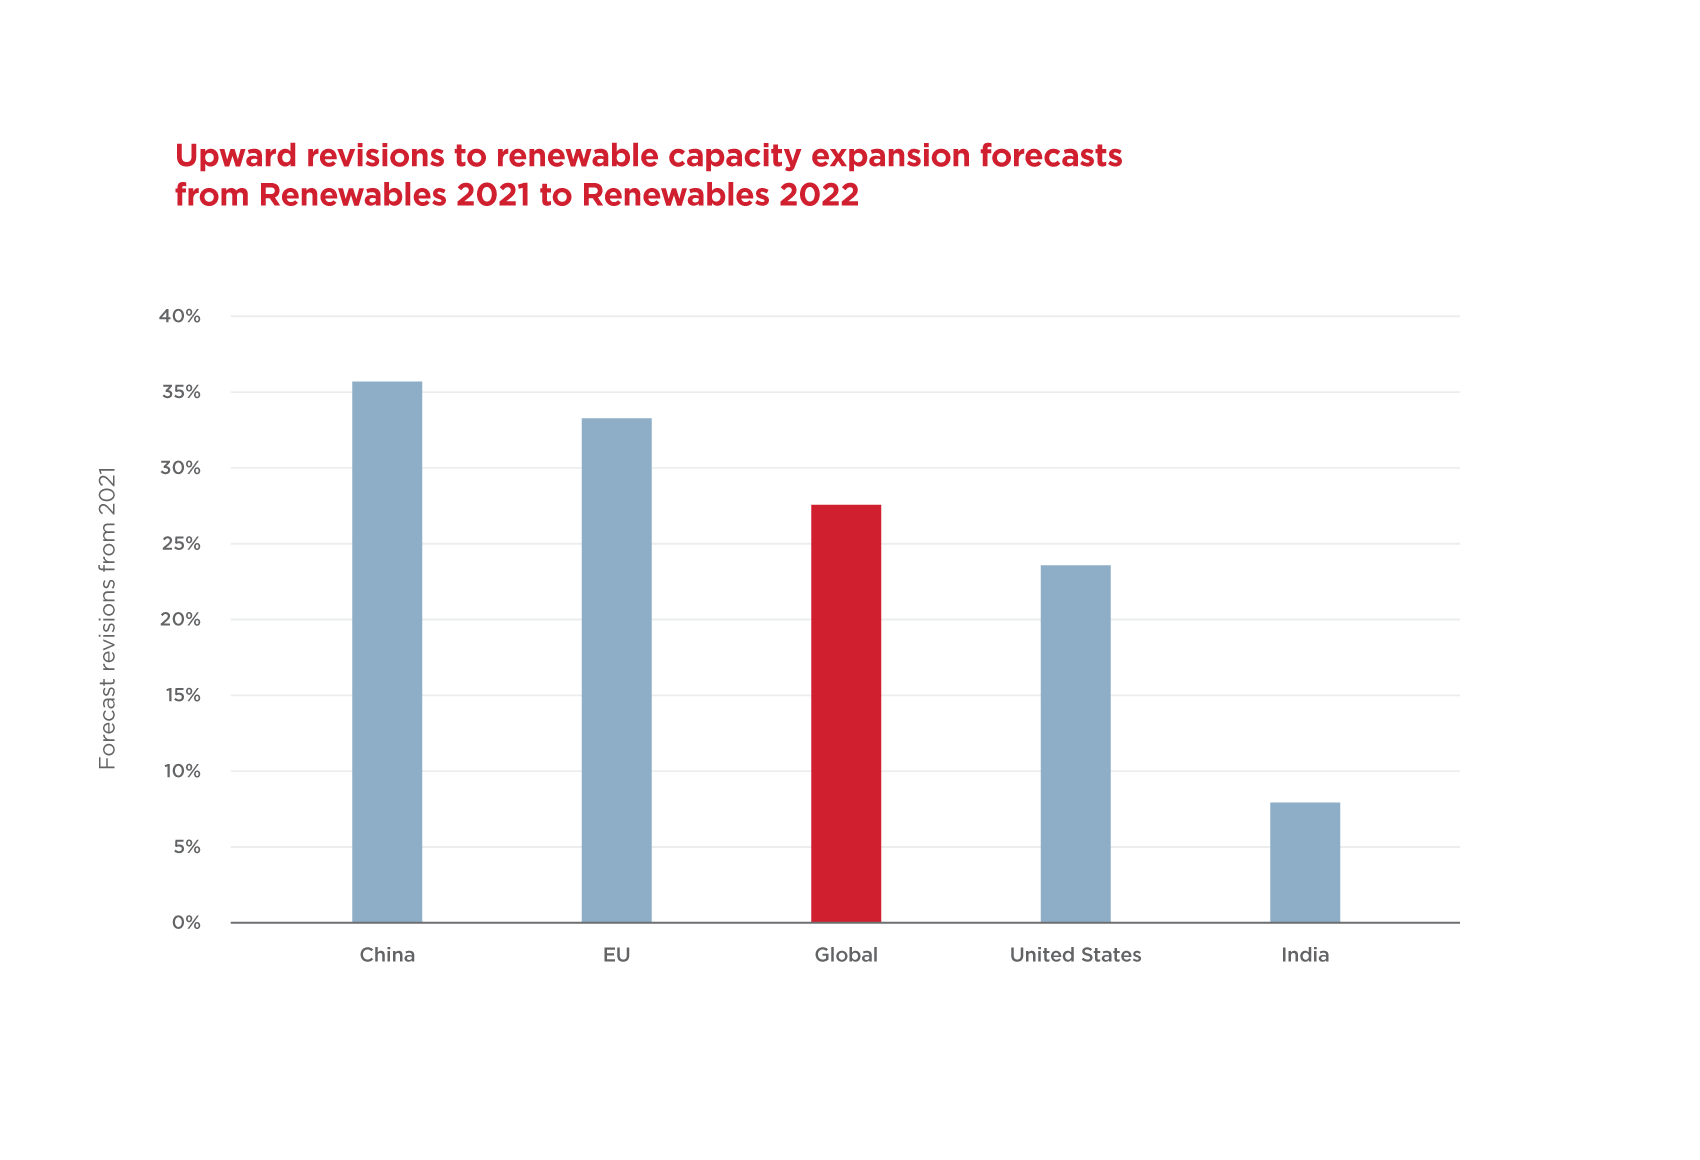 Upward revisions to renewable capacity expansion forecasts from renewables 2021 to renewables 2022